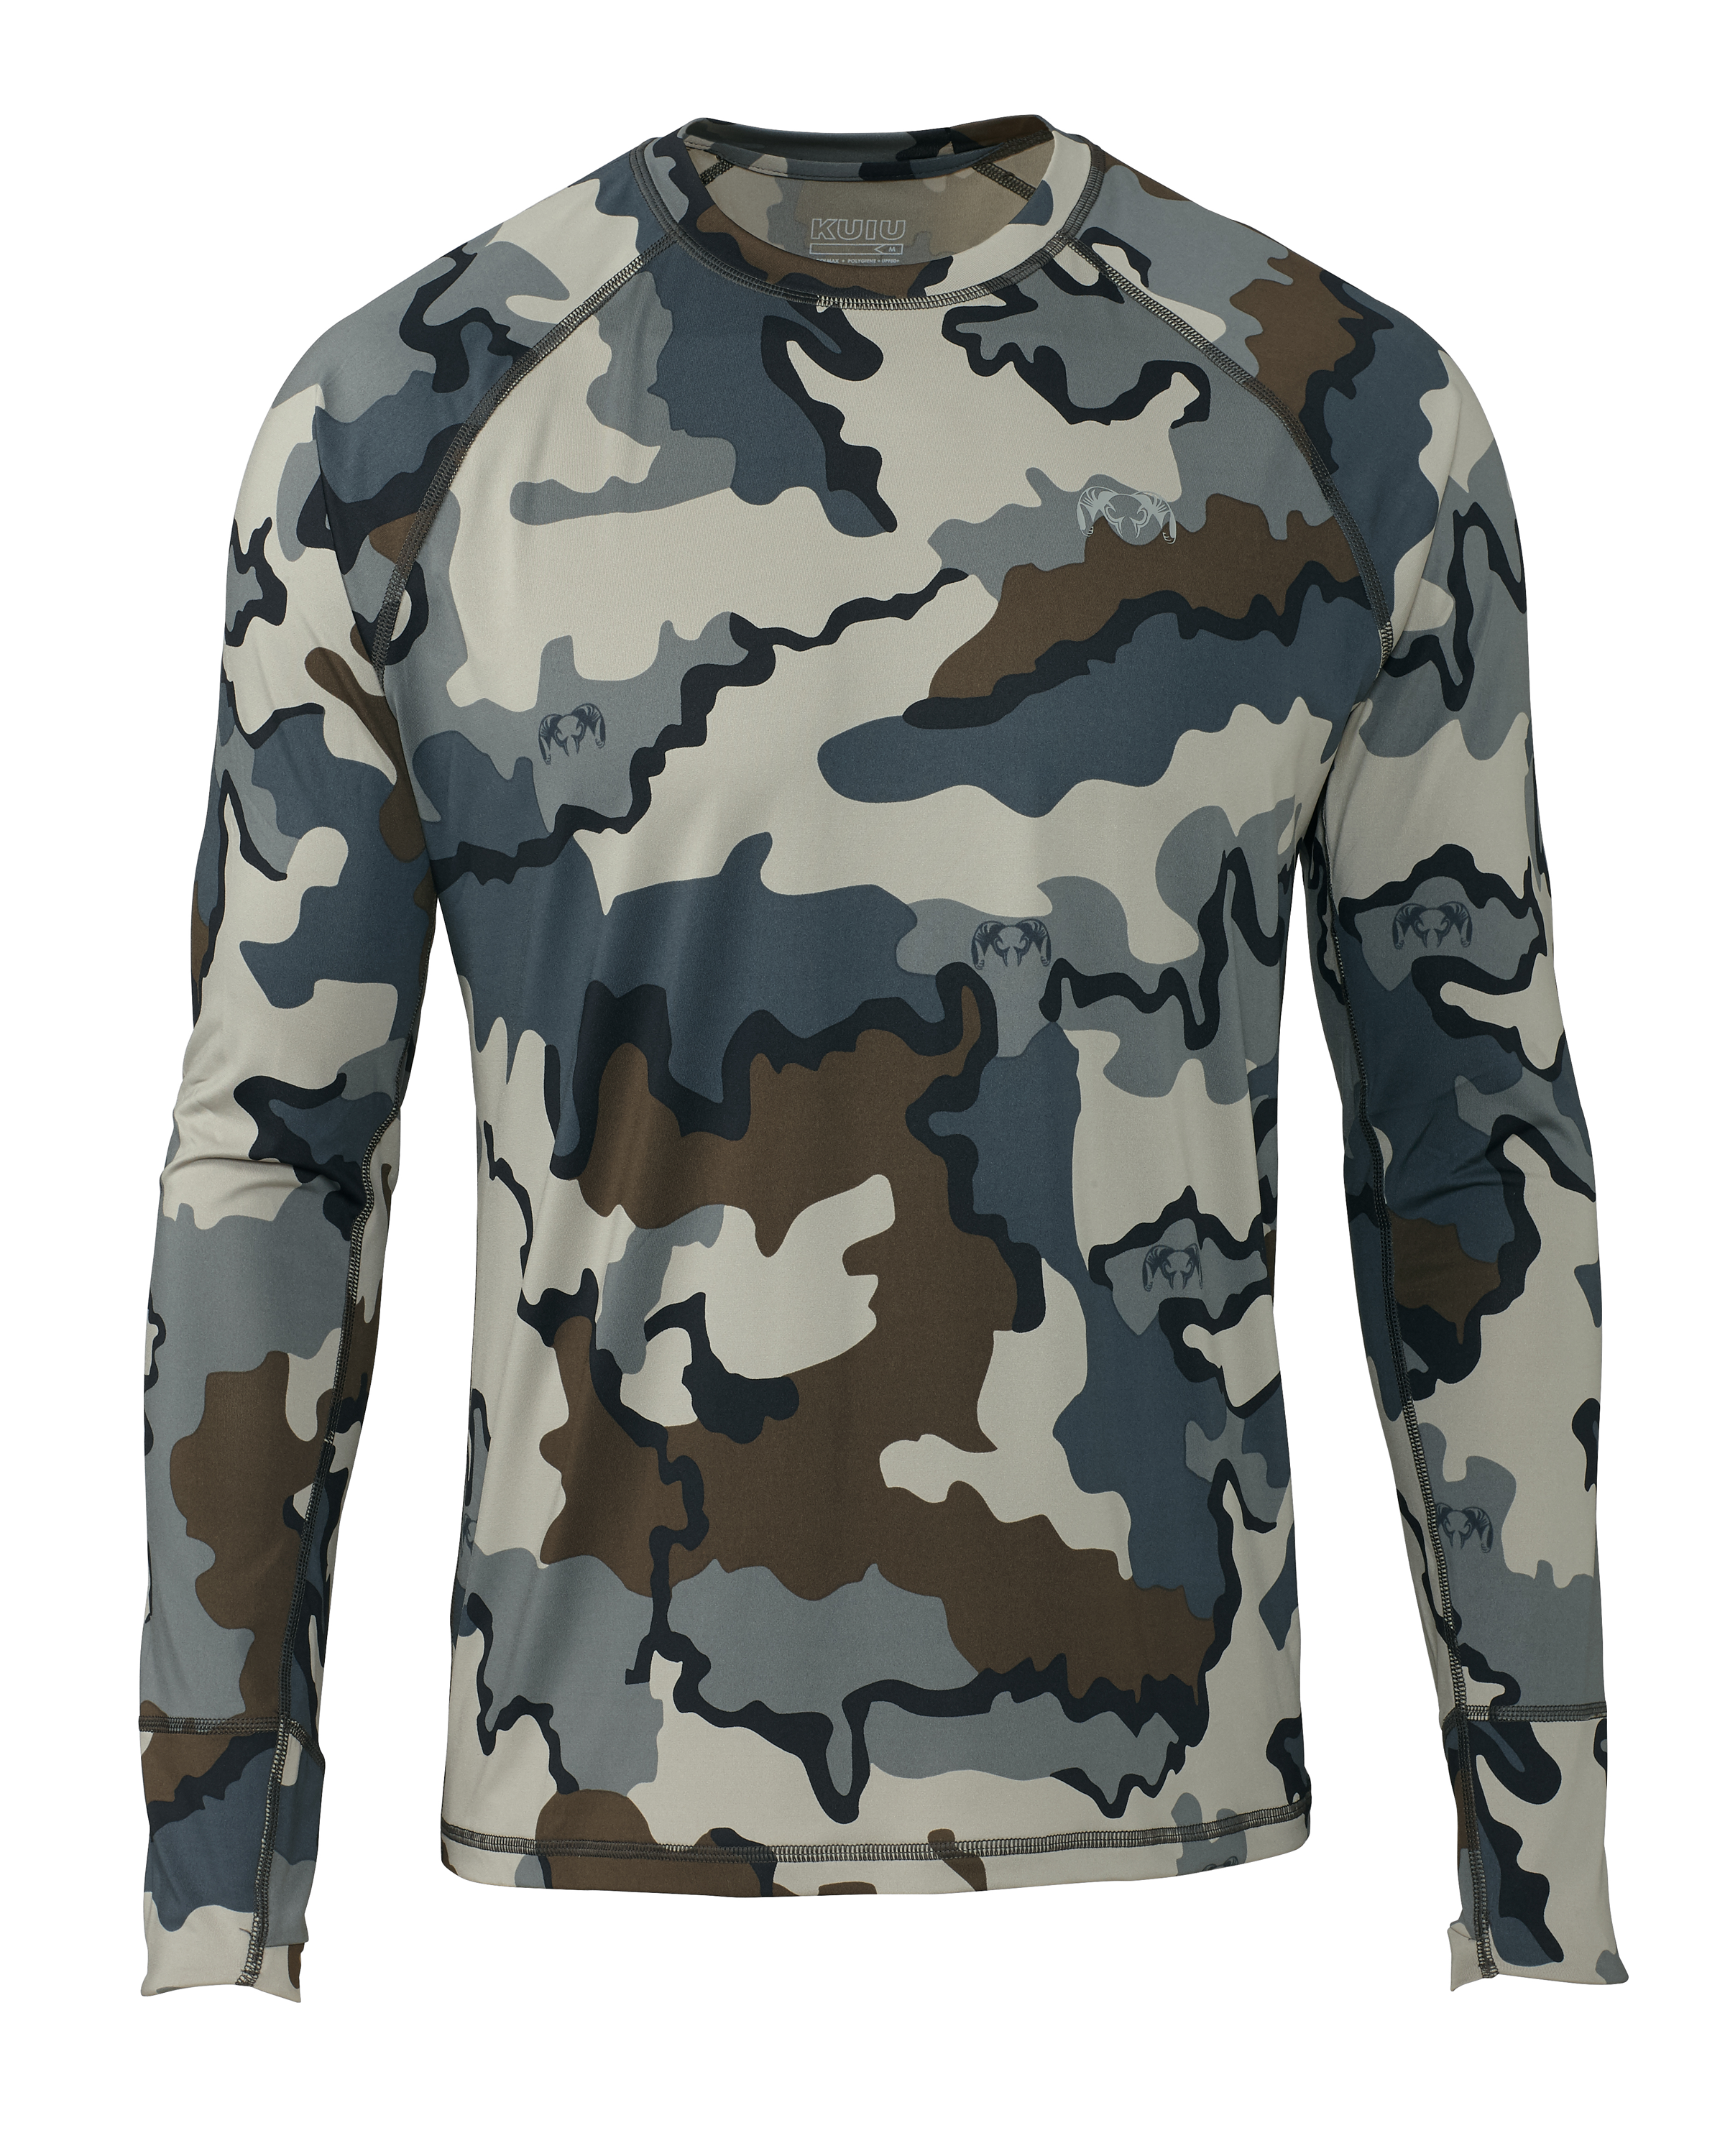 KUIU Gila Long Sleeves Crew Hunting Shirt in Vias | Size 4XL